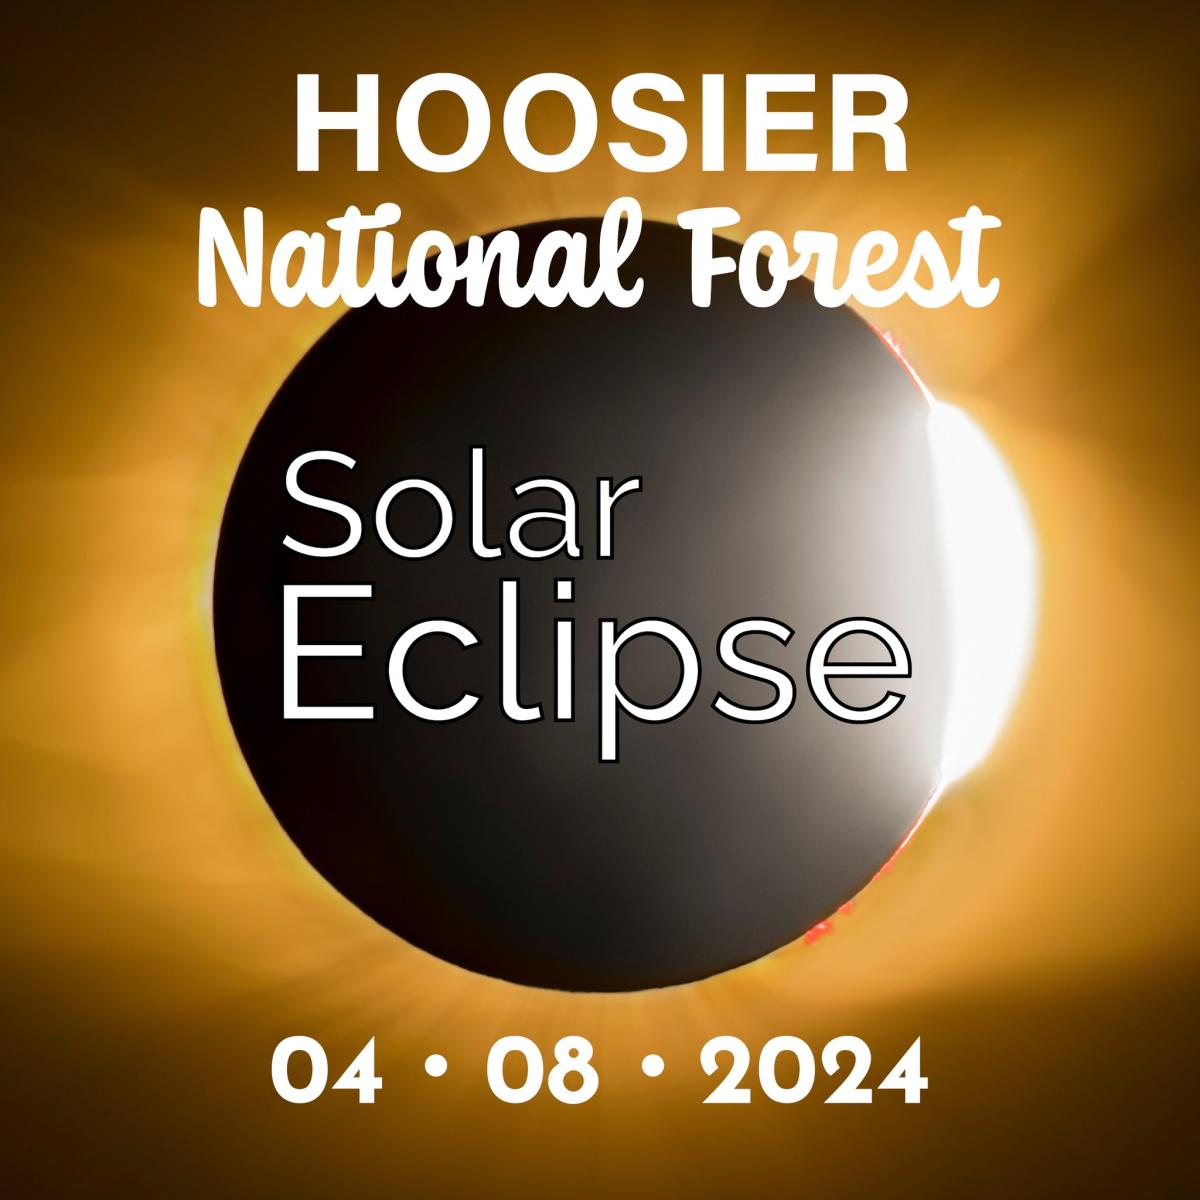 Hoosier National Forest Eclipse Logo